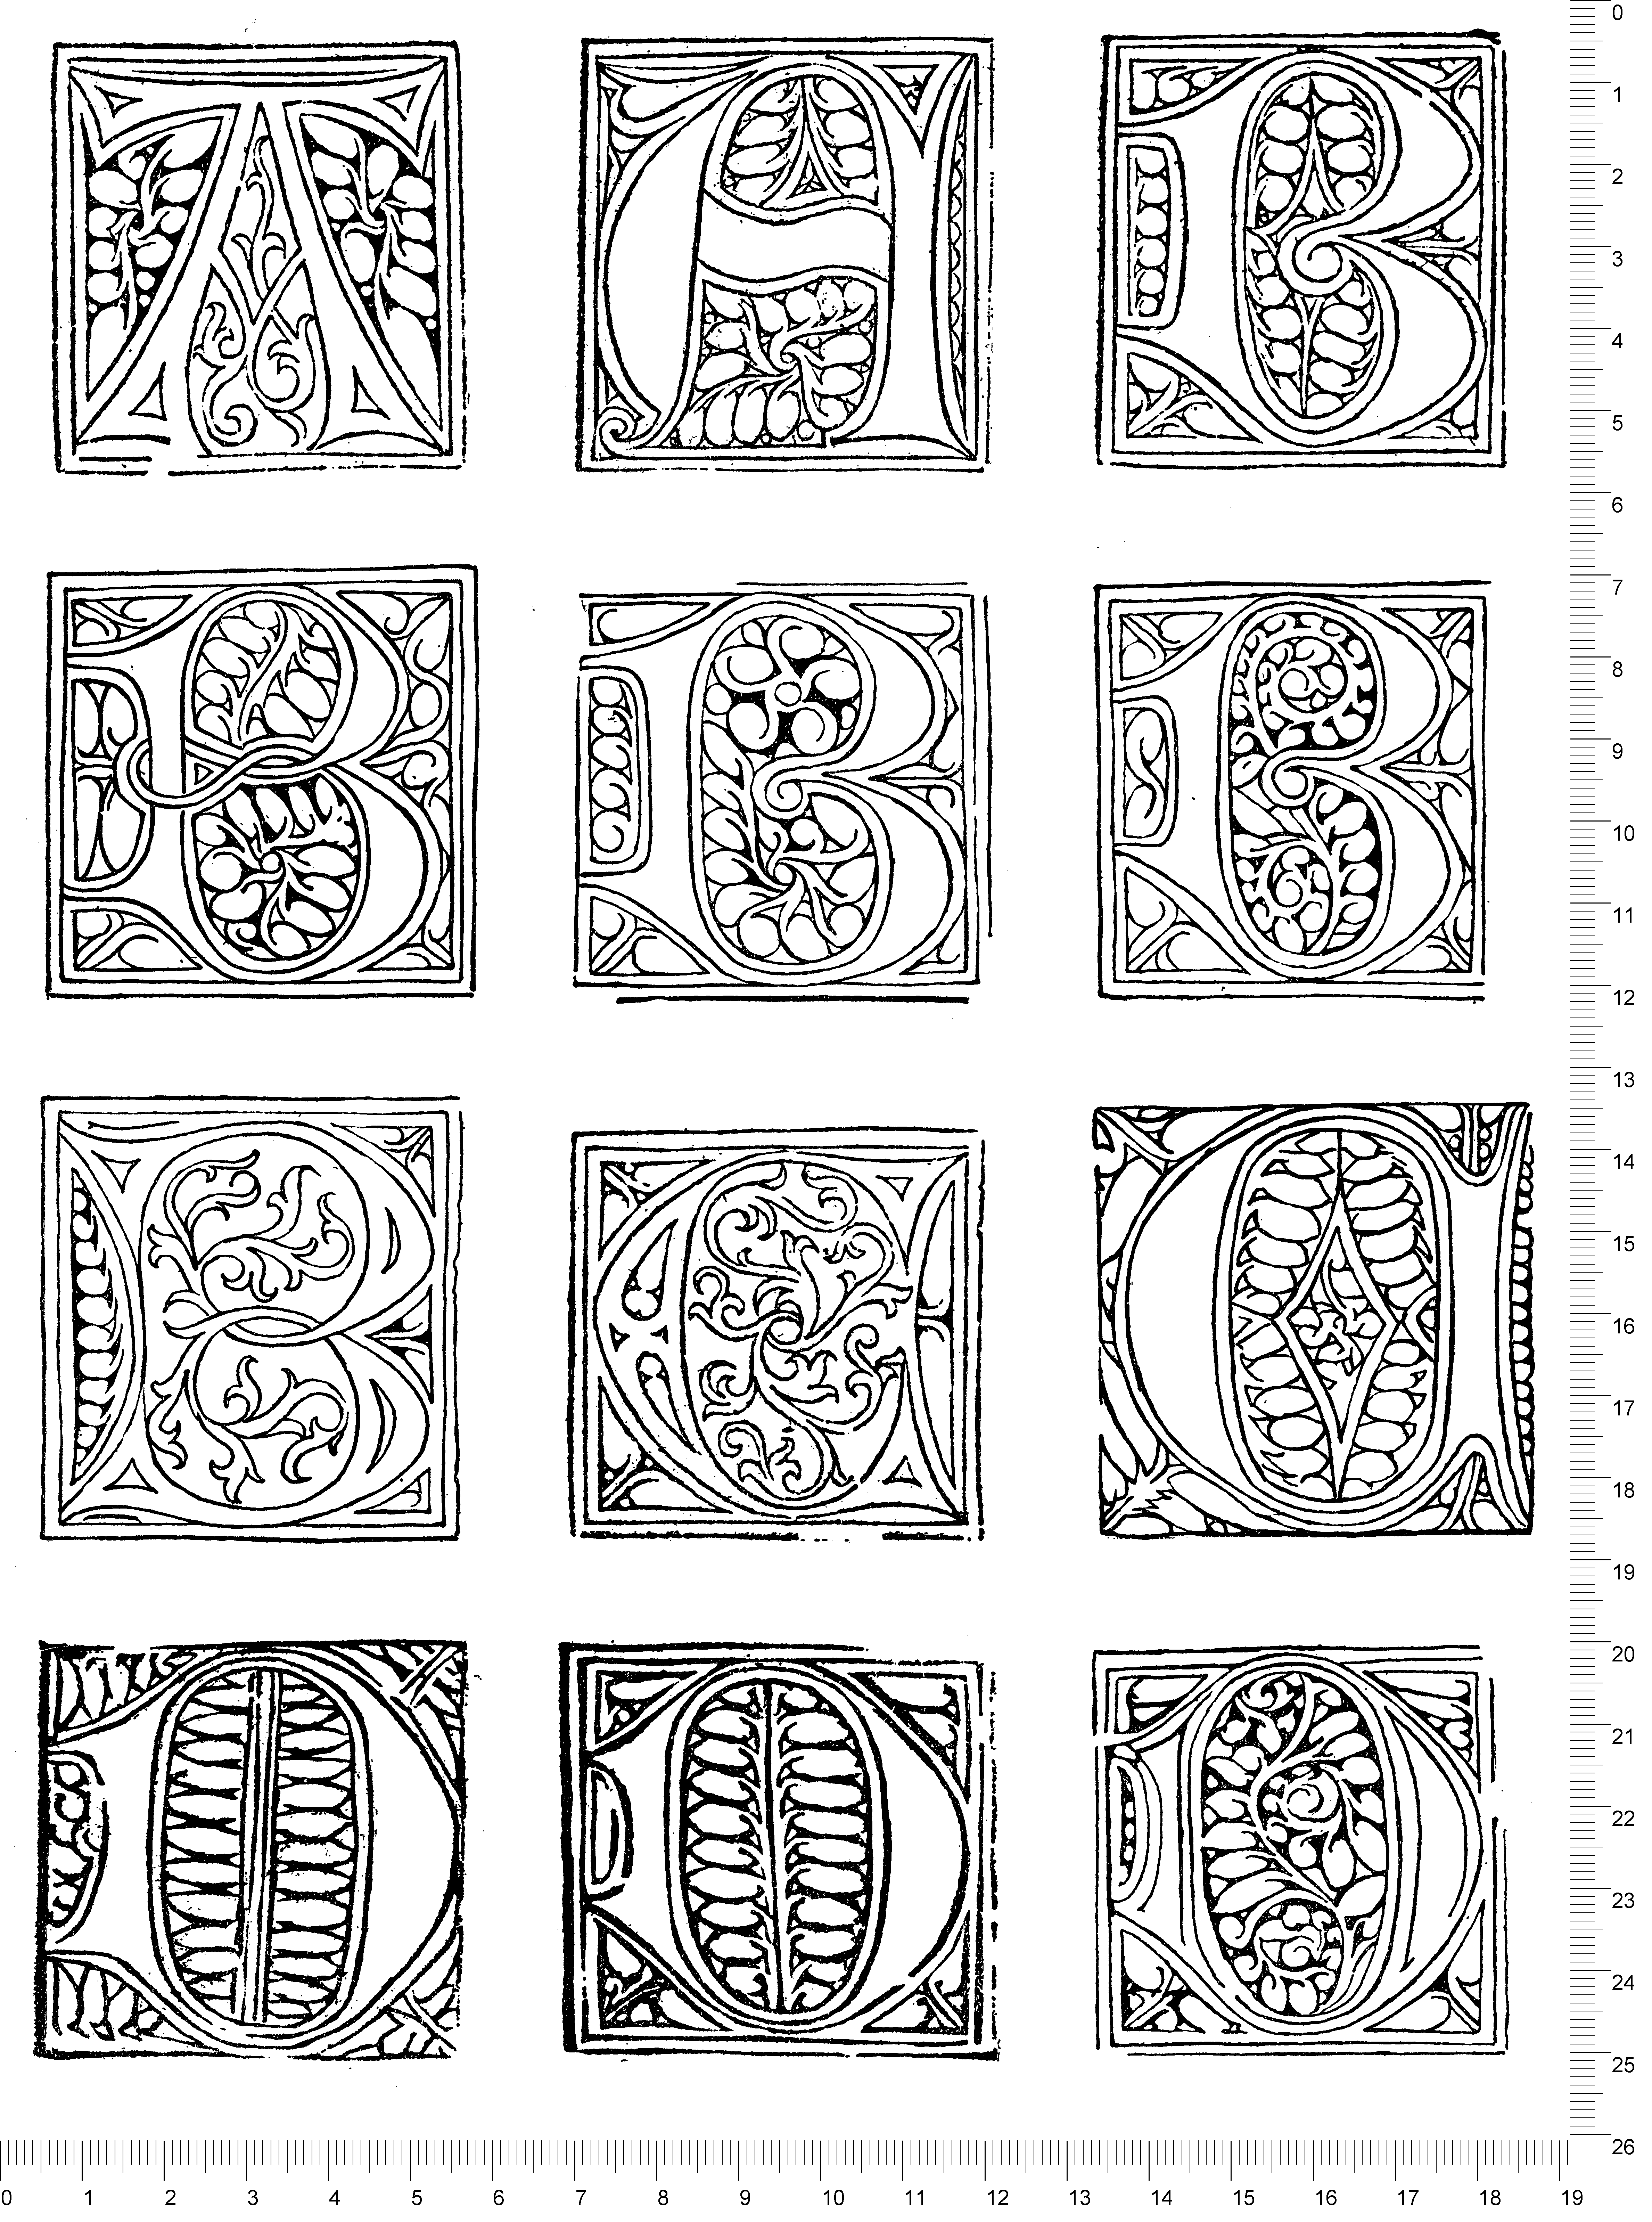 Abbildung der GfT-Tafeln vonGfT0675.1